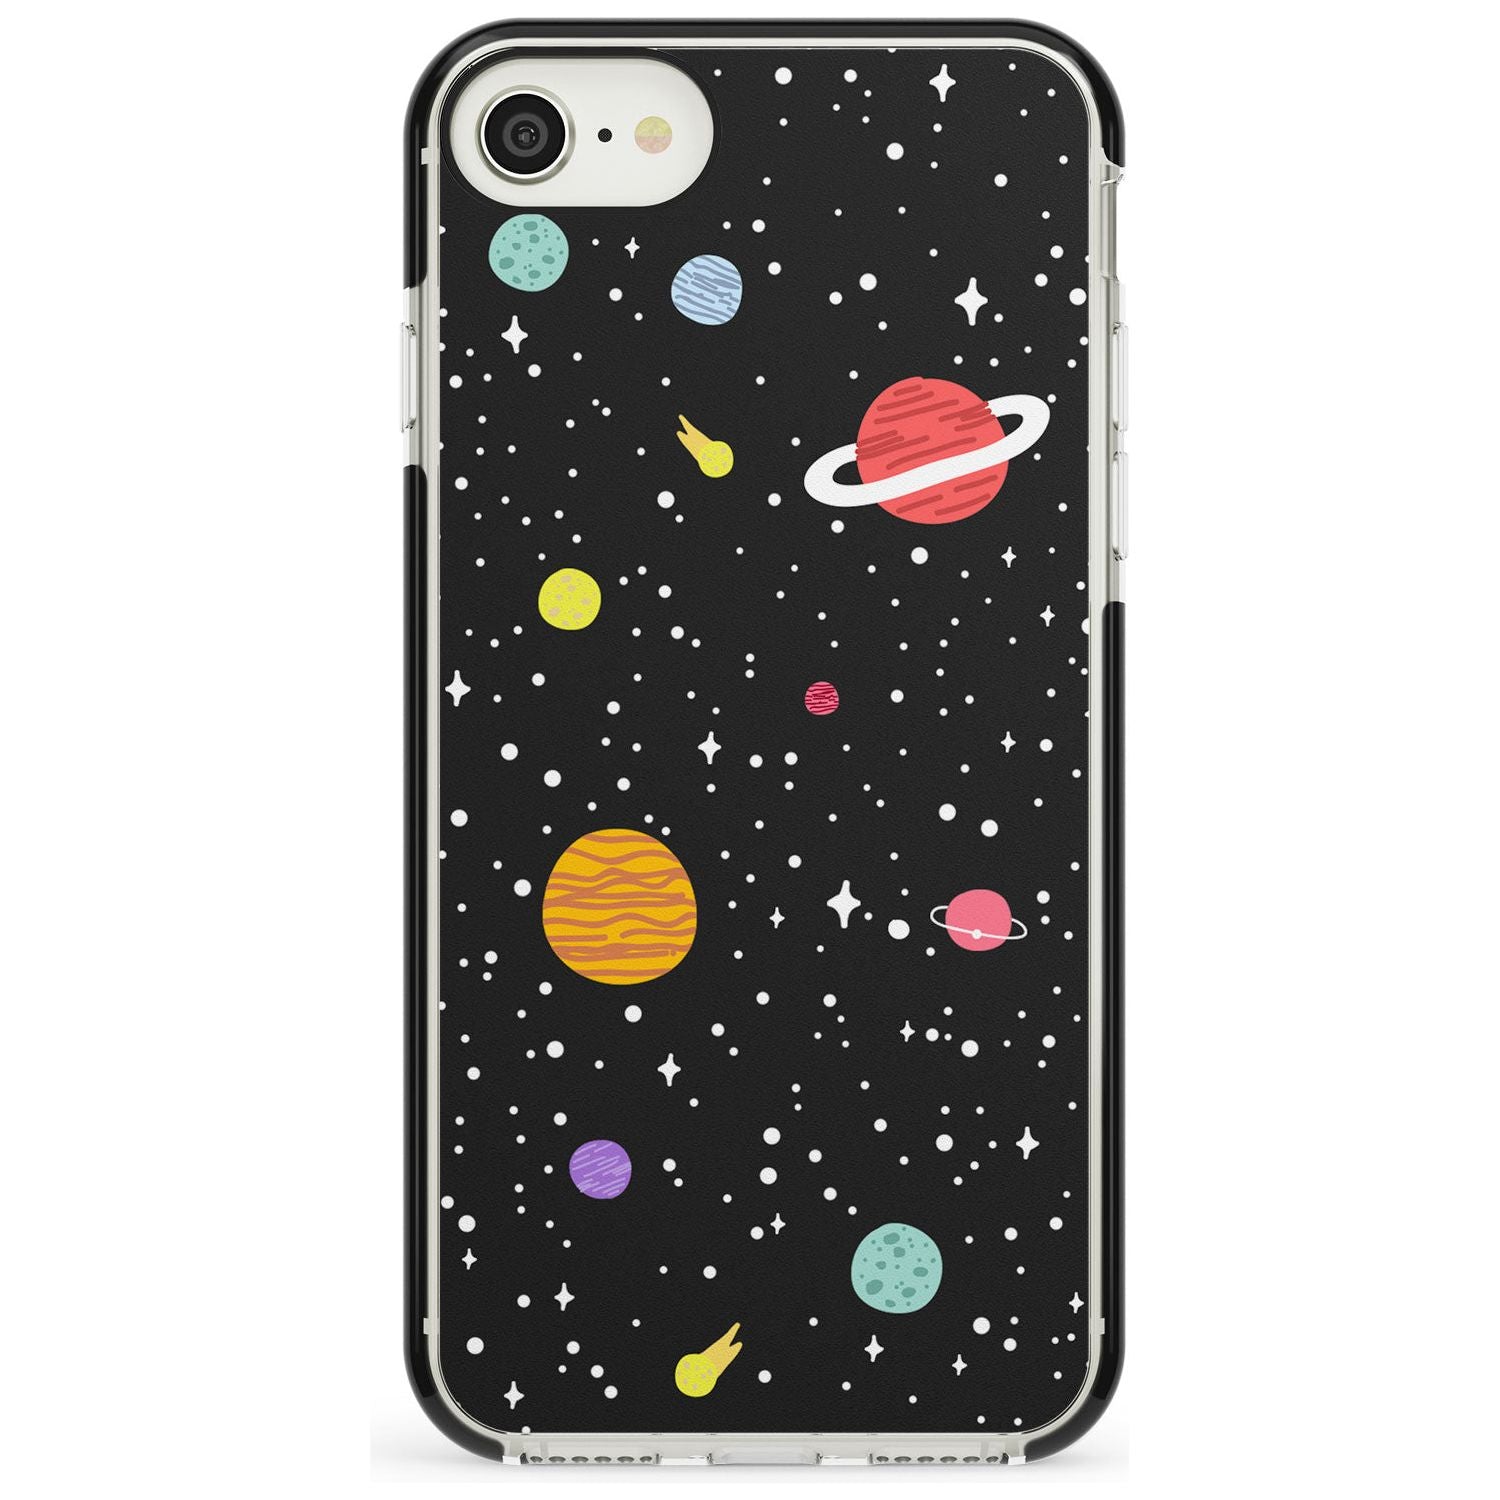 Cute Cartoon Planets Black Impact Phone Case for iPhone SE 8 7 Plus